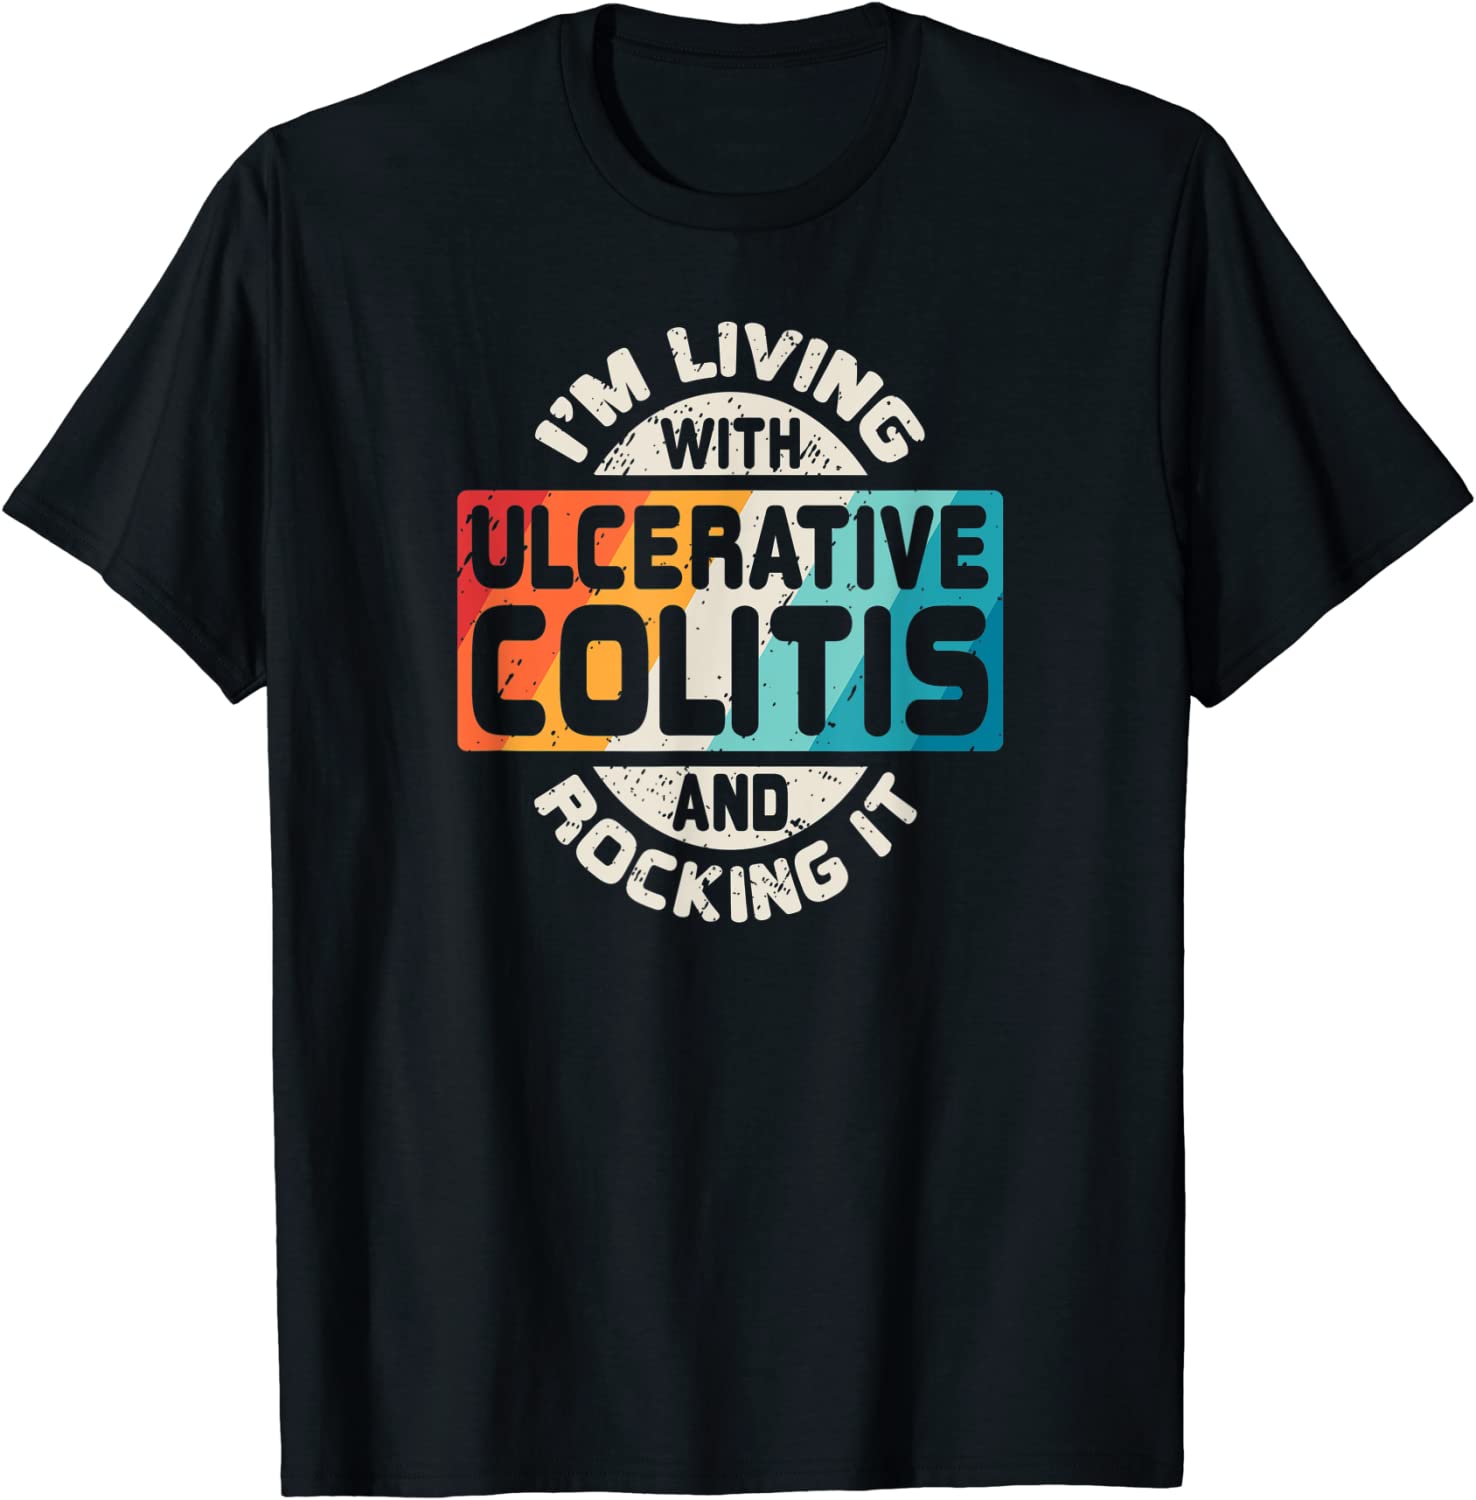 Amazon.com: Ulcerative Colitis T Shirt Awareness Gift: Clothing